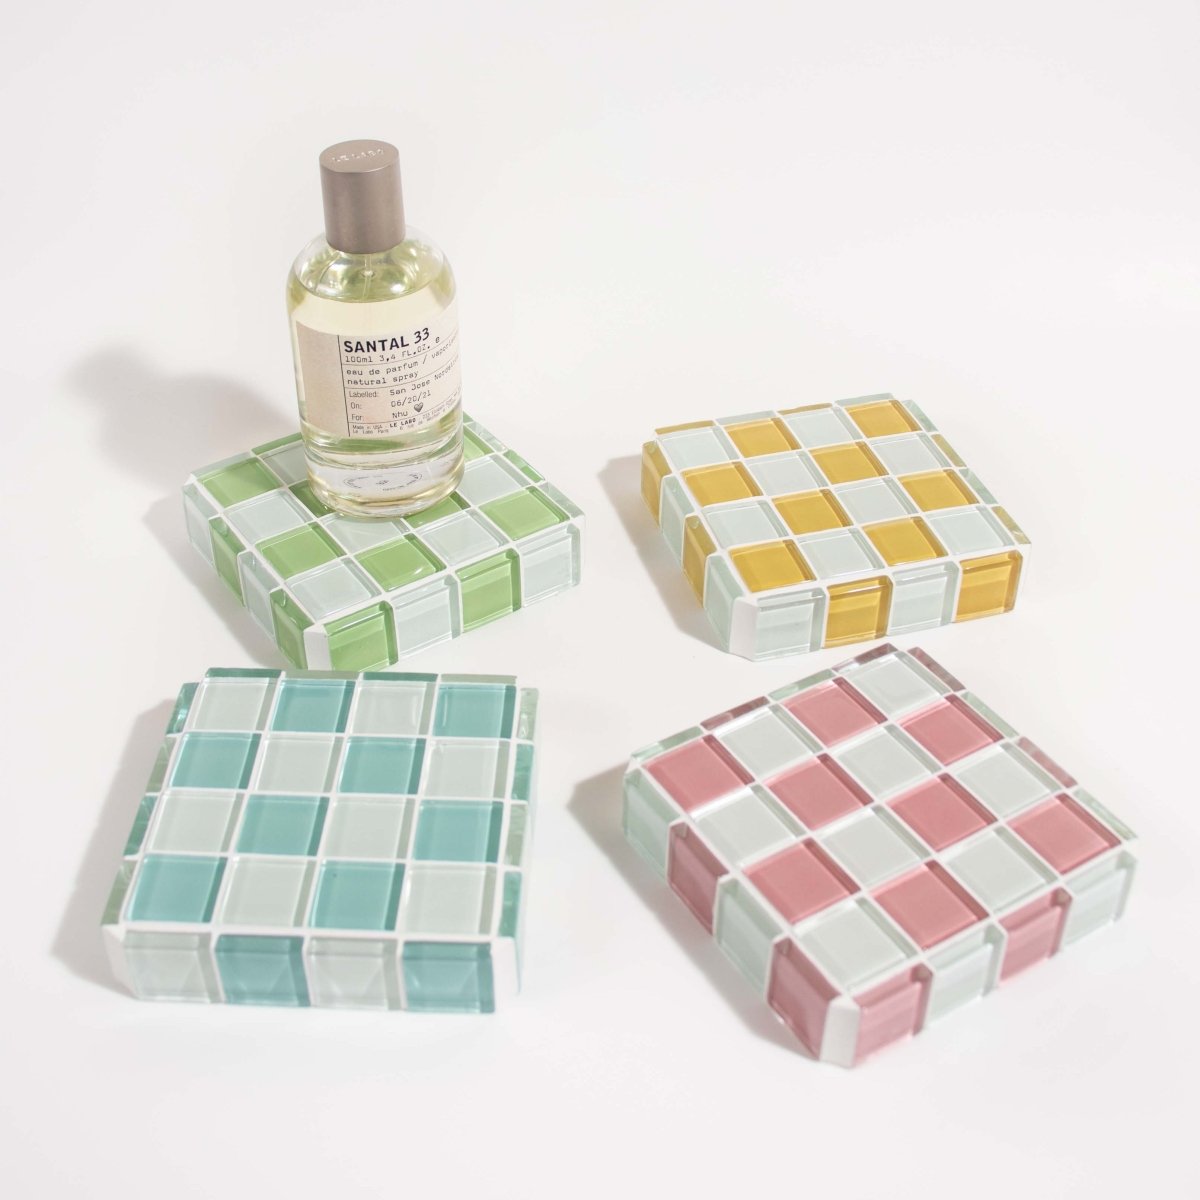 Subtle Art Studios Glass Tile Cube - Pink Himalayan Milk Chocolate - lily & onyx